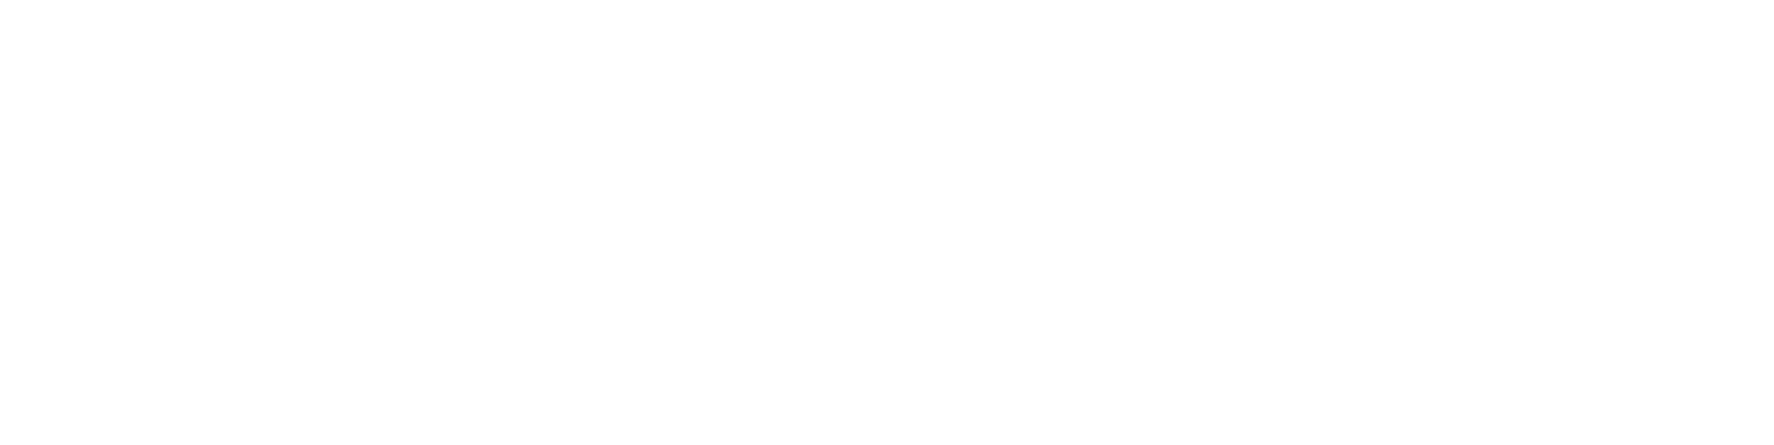 Nano-X Imaging Logo groß für dunkle Hintergründe (transparentes PNG)